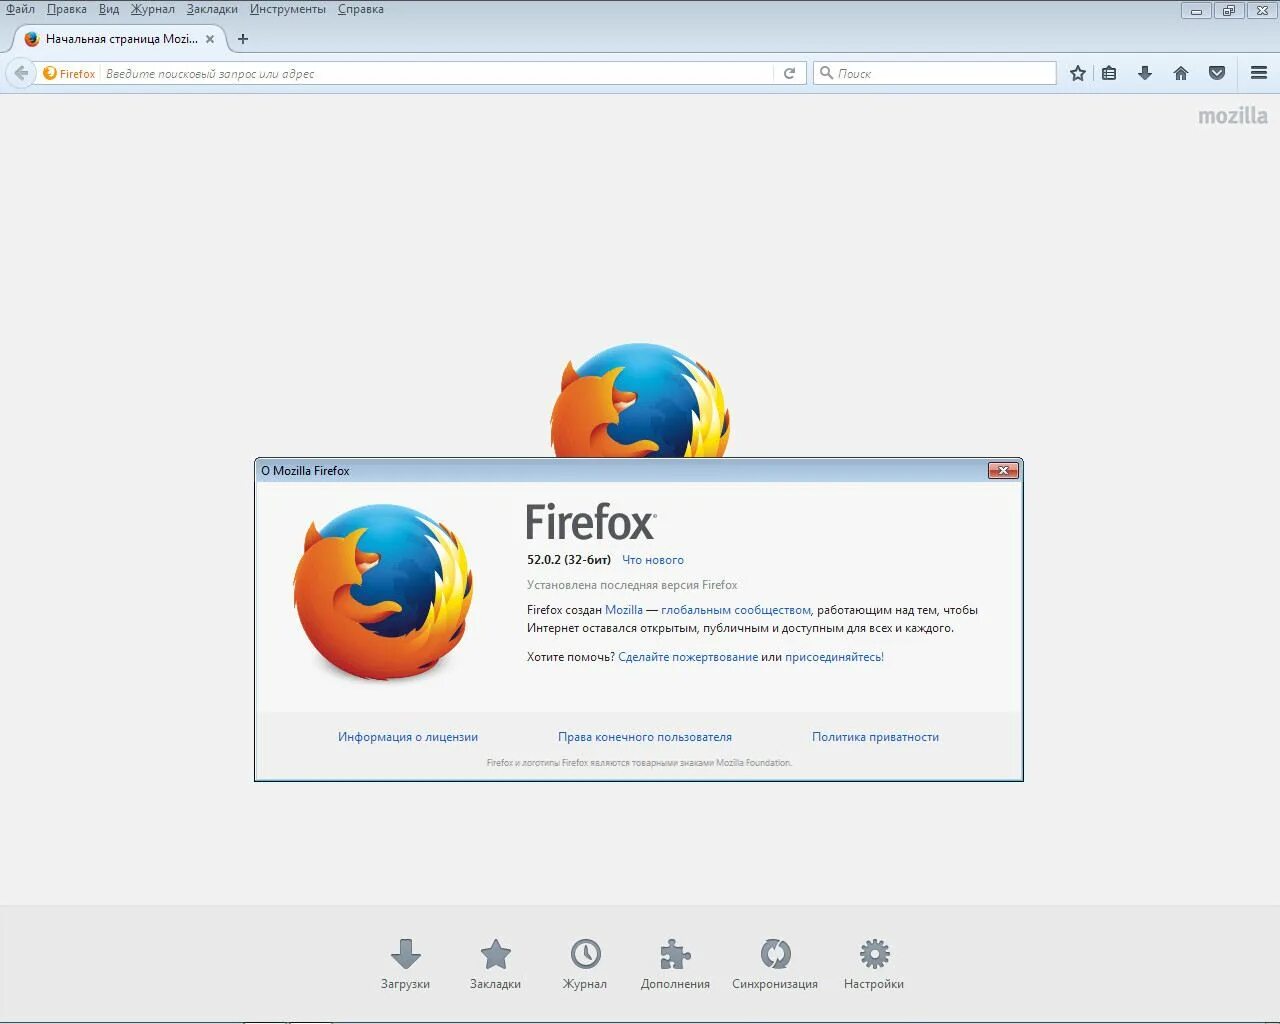 Версия браузера мазила. Мозила Главная страница. Фаерфокс Главная страница. Firefox последняя версия. Мазила браузер Главная страница.